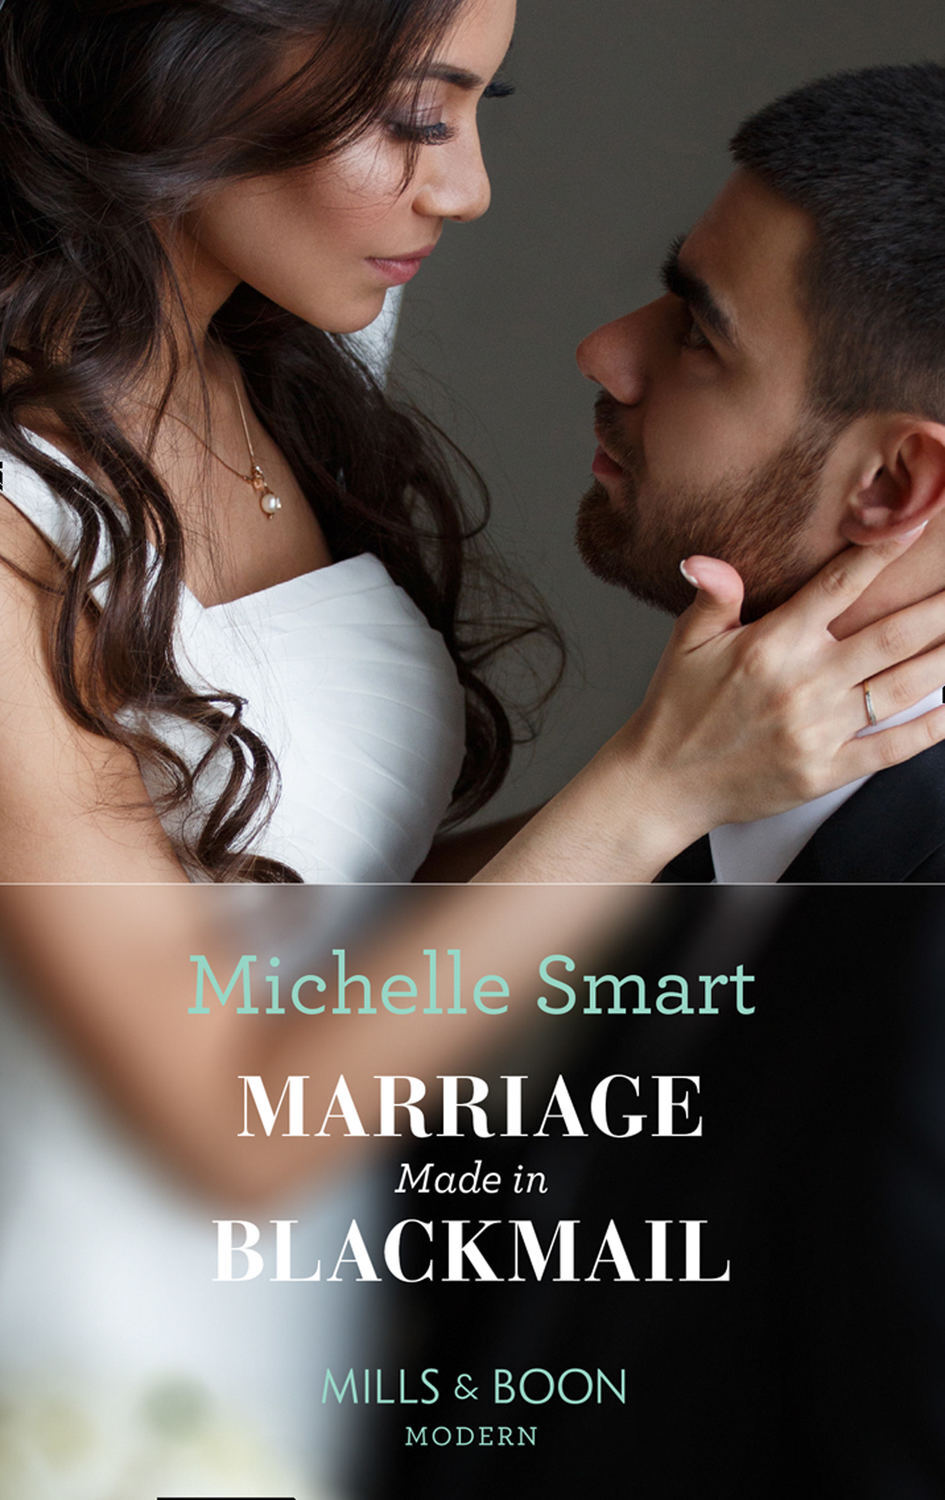 Читать книги про брак. Marriage книга. Marry. Made. Modern marriage book.